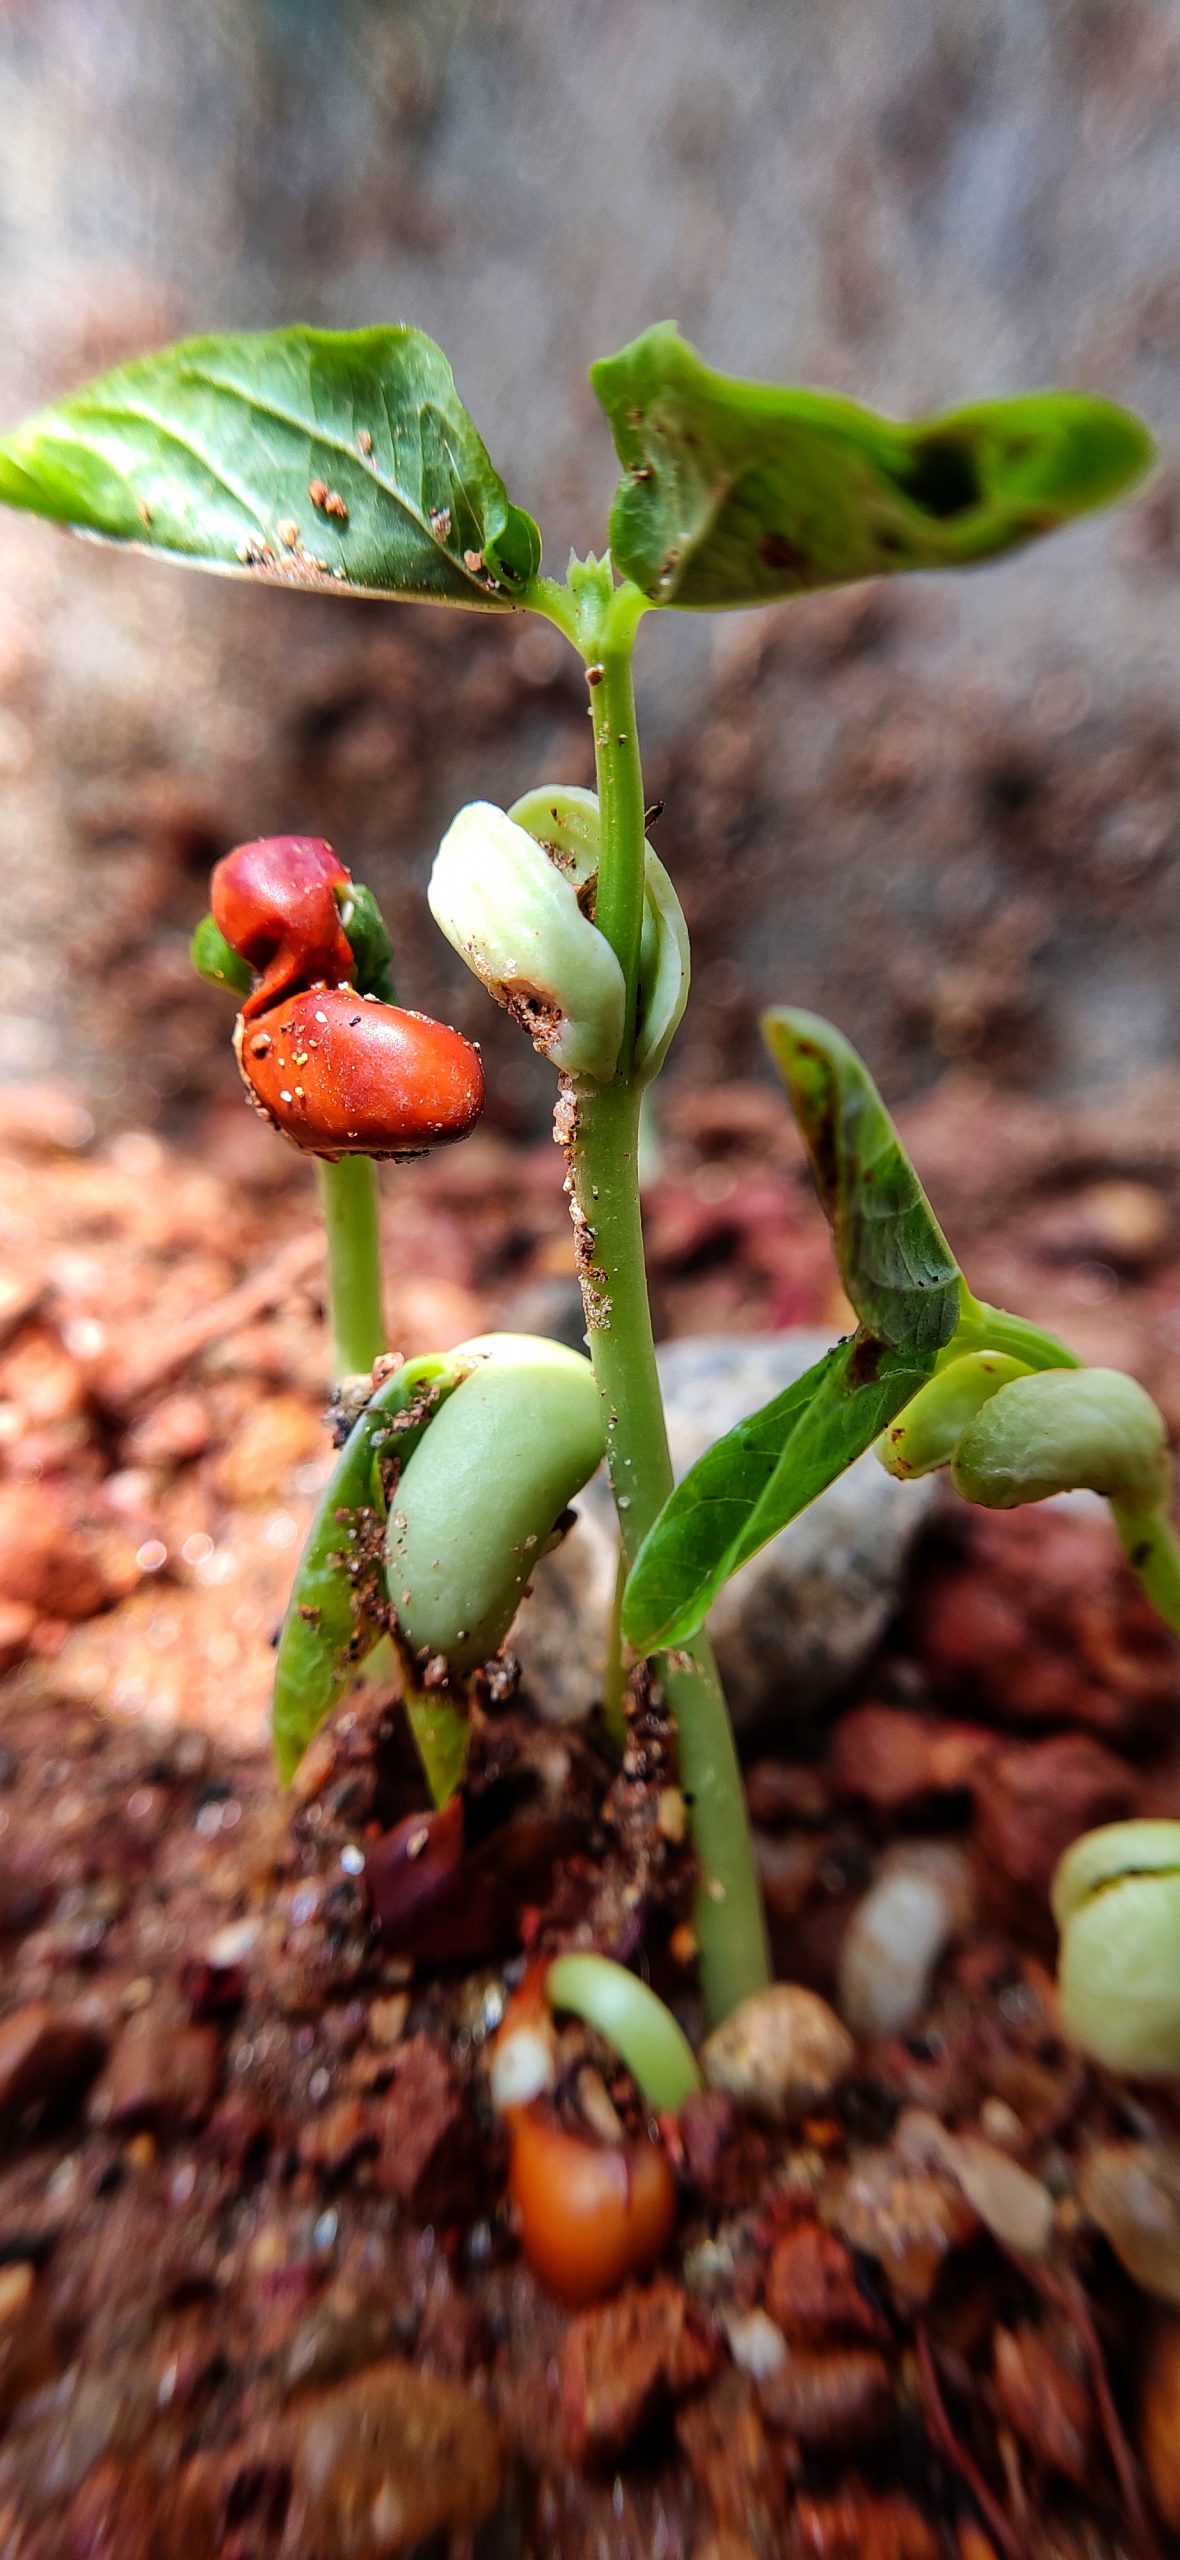 Emerging pea plants